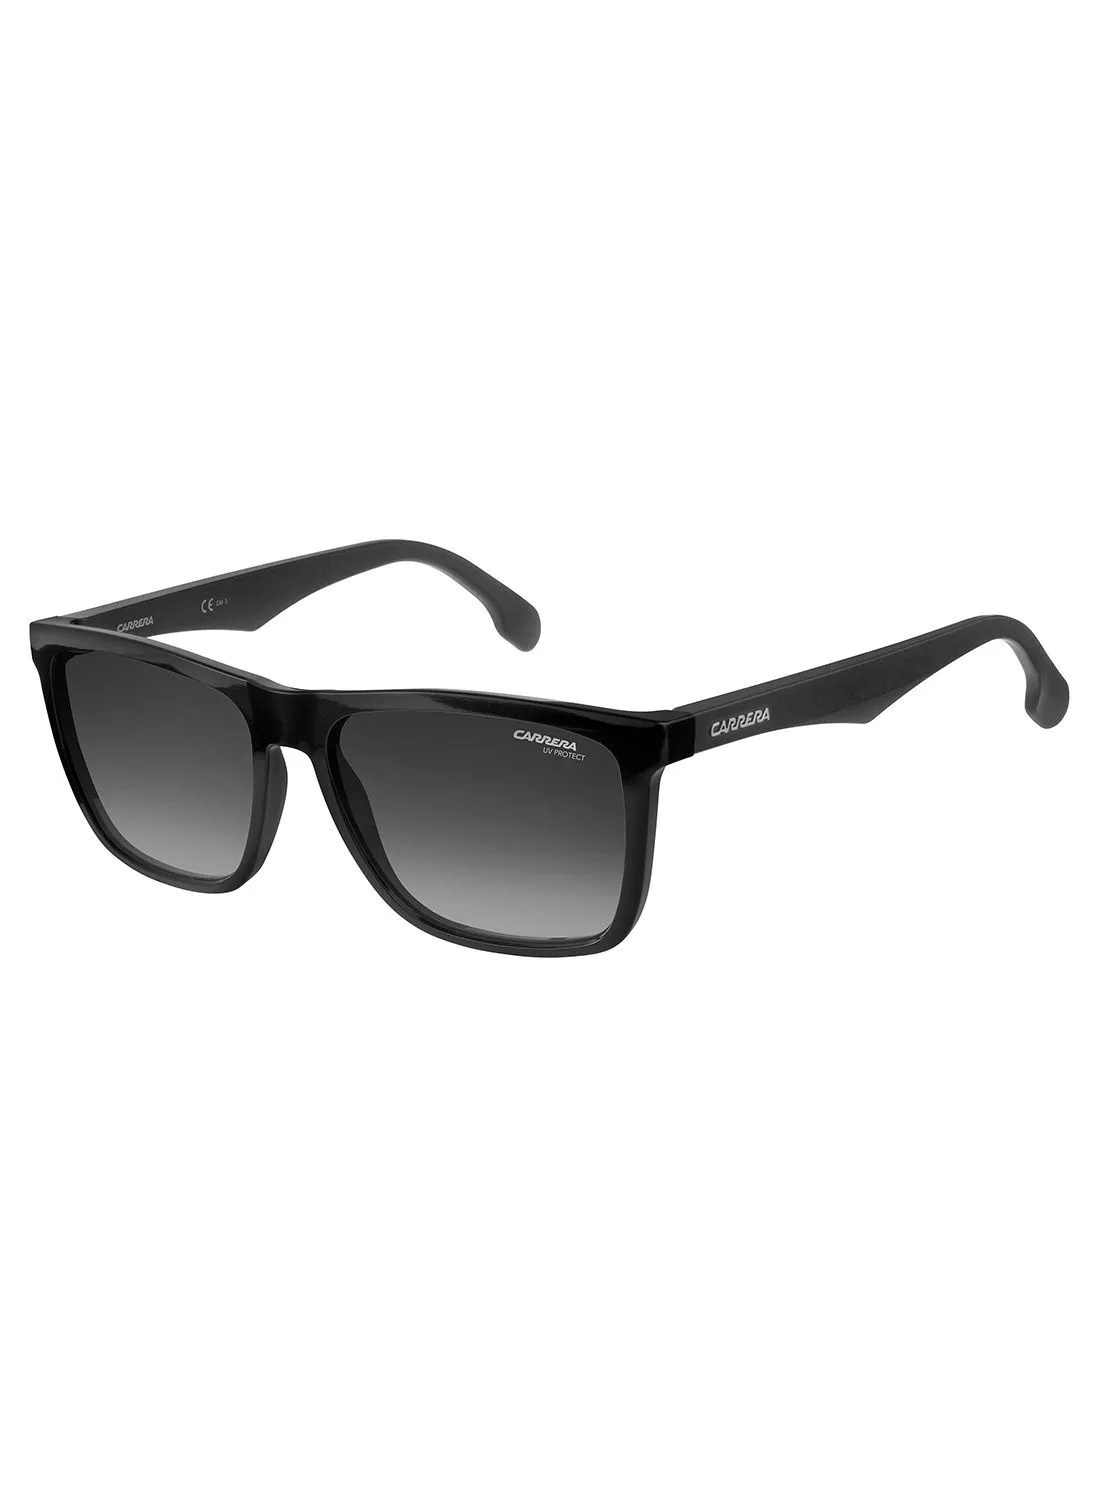 CARRERA نظارة شمسية مستطيلة للحماية من الأشعة فوق البنفسجية CARRERA 5041 / S BLACK 56